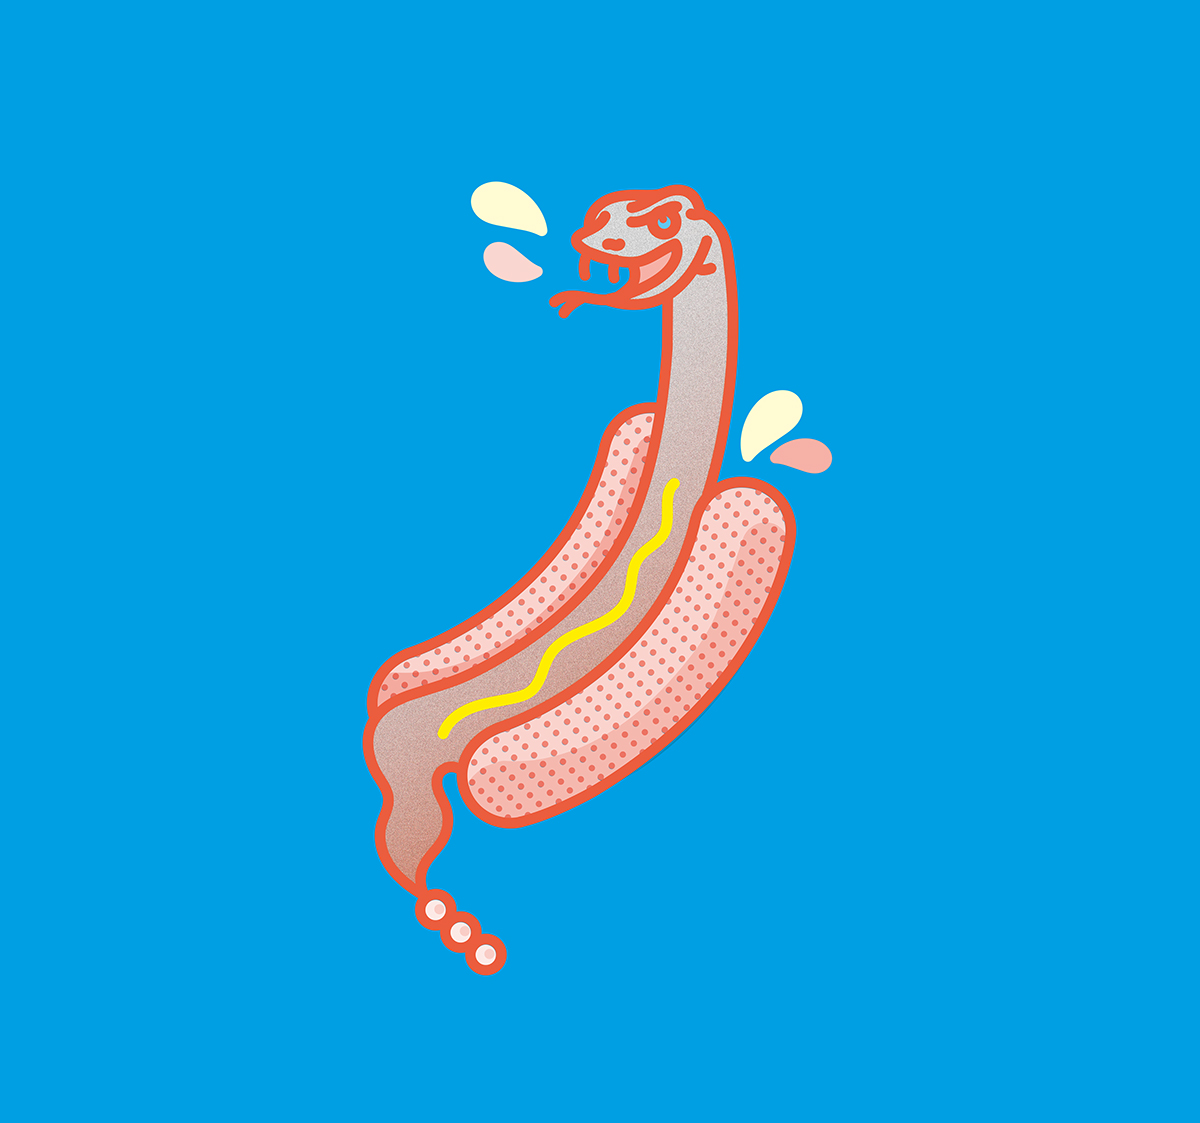 VERSACE selfie tongue hot dog snake clip art Icon puppy Vegetarian vegetables